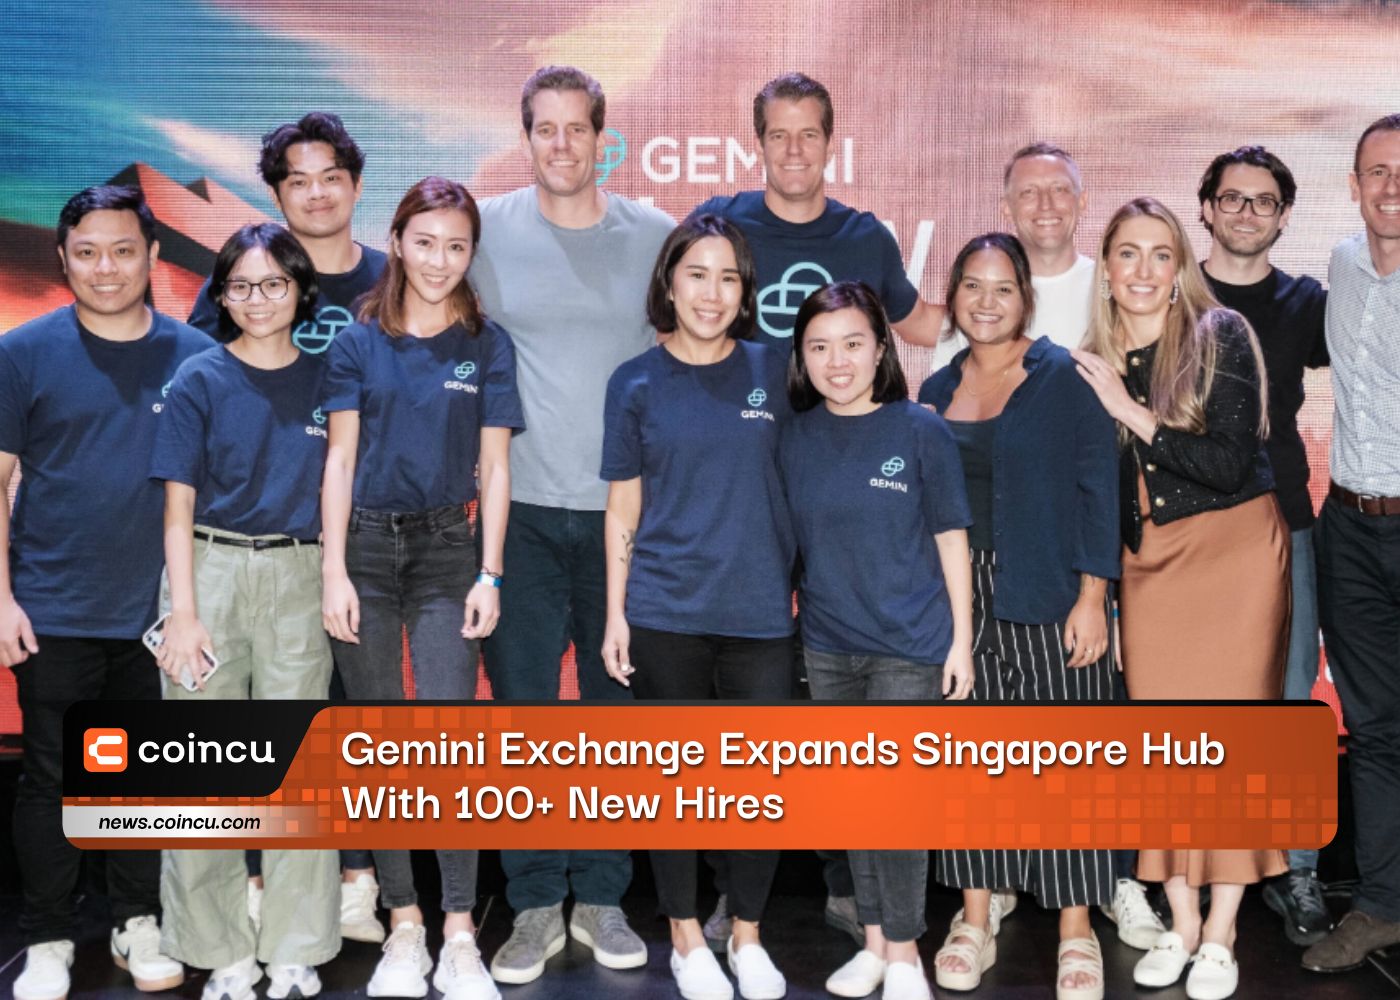 Gemini Exchange 扩大新加坡中心，新增 100 多名员工